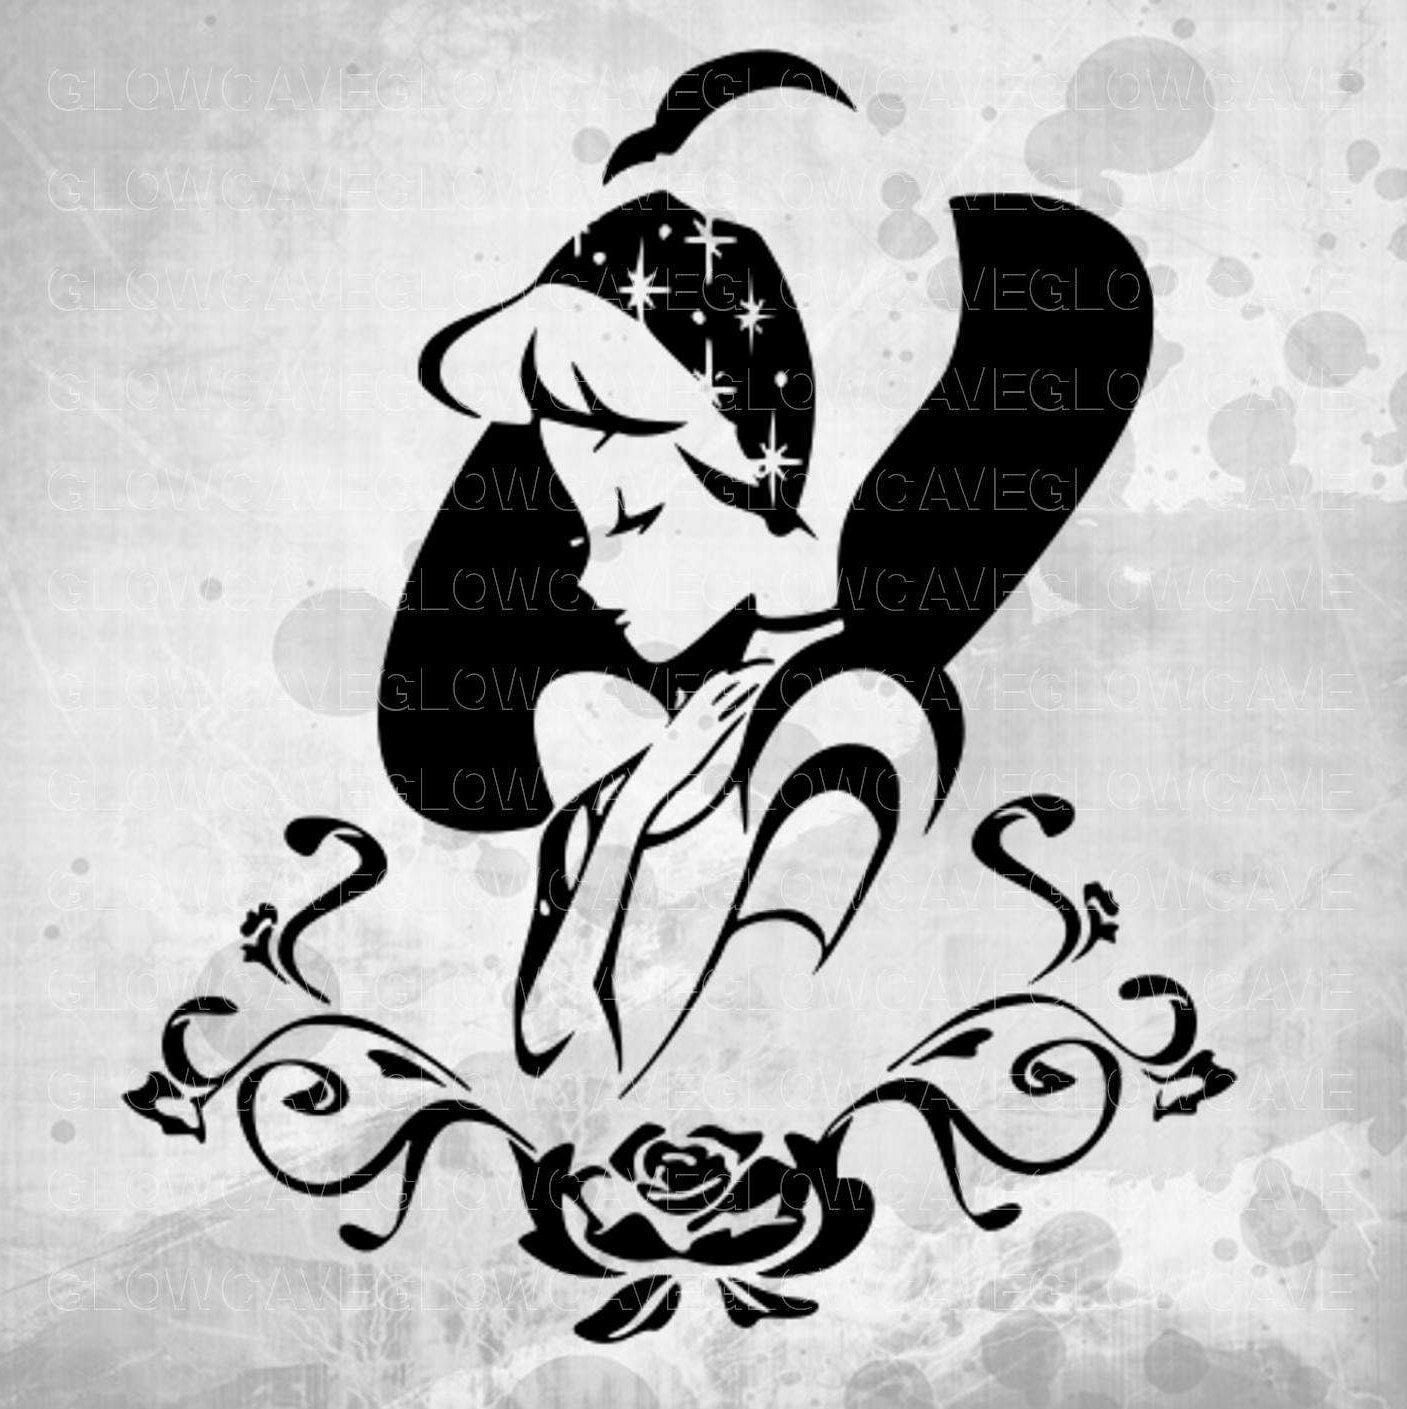 Disney Princess SVG Files